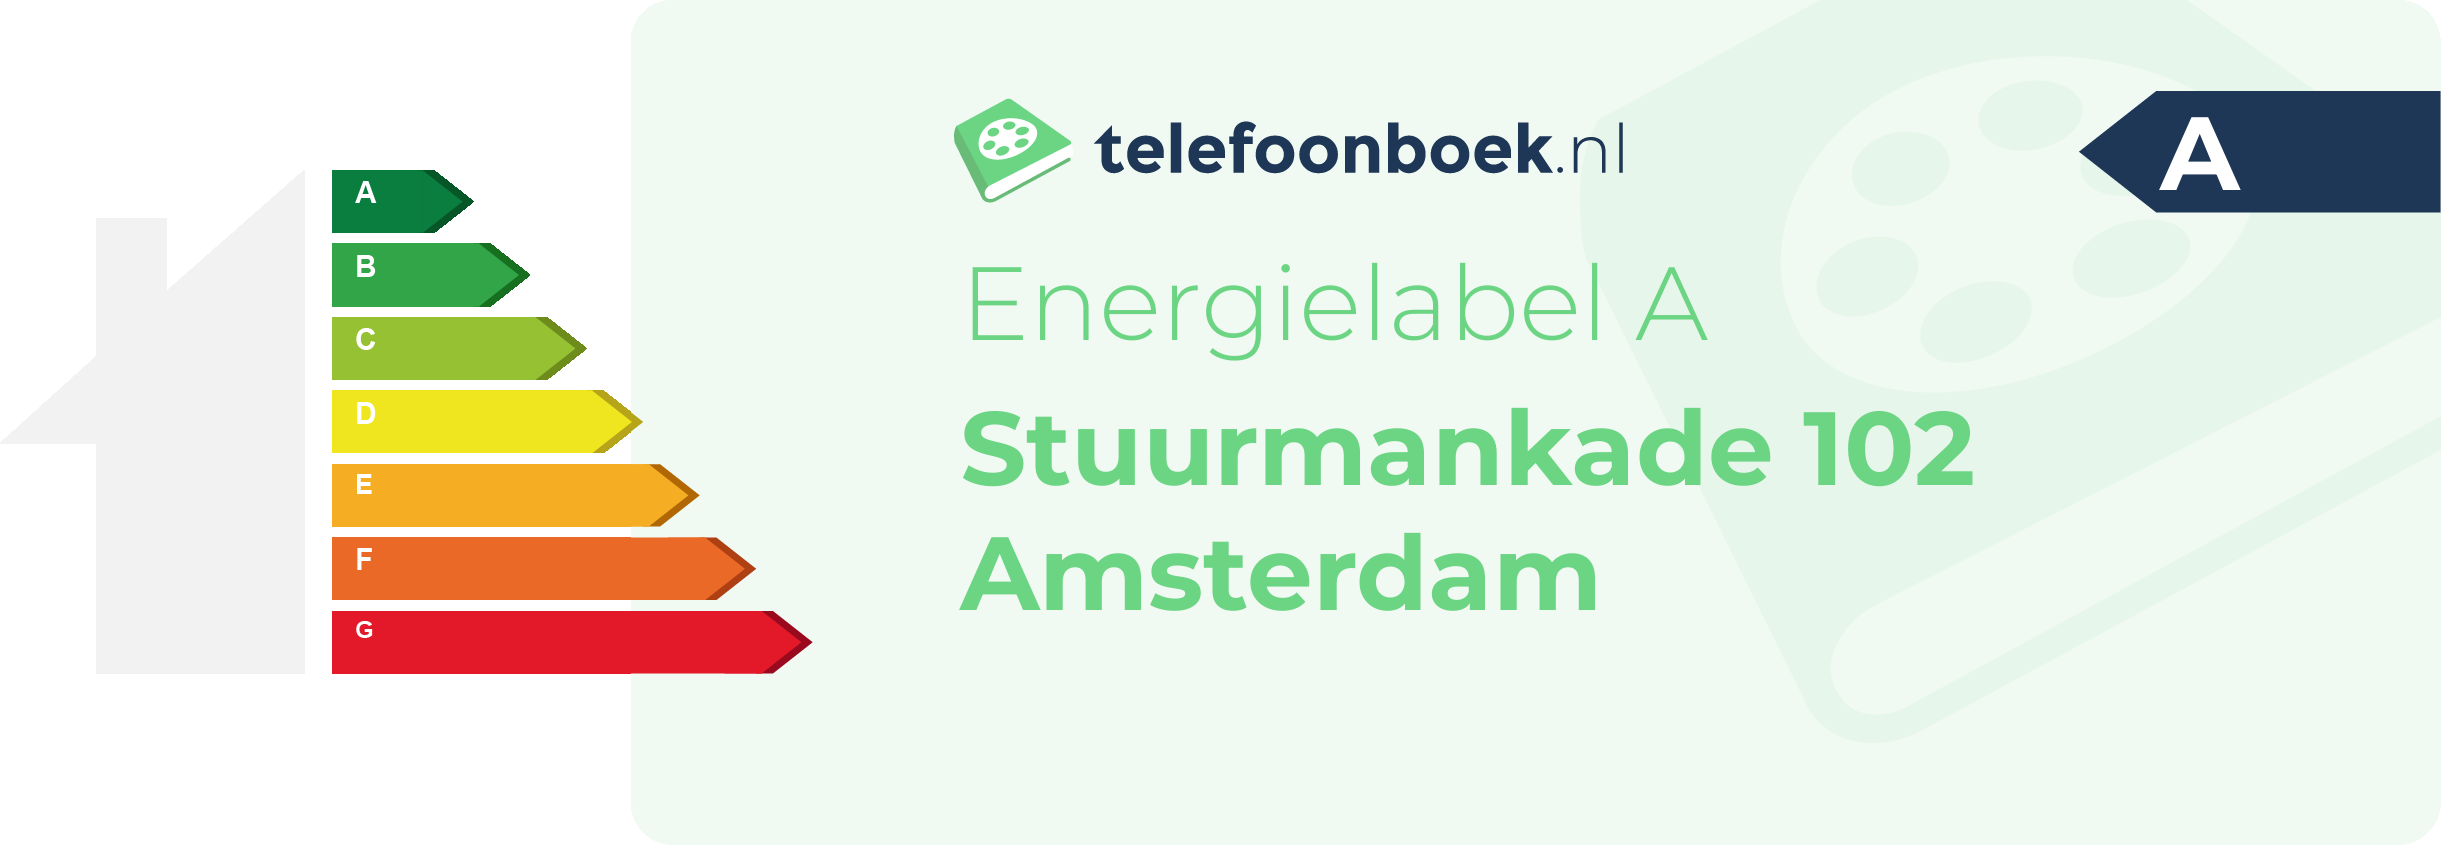 Energielabel Stuurmankade 102 Amsterdam